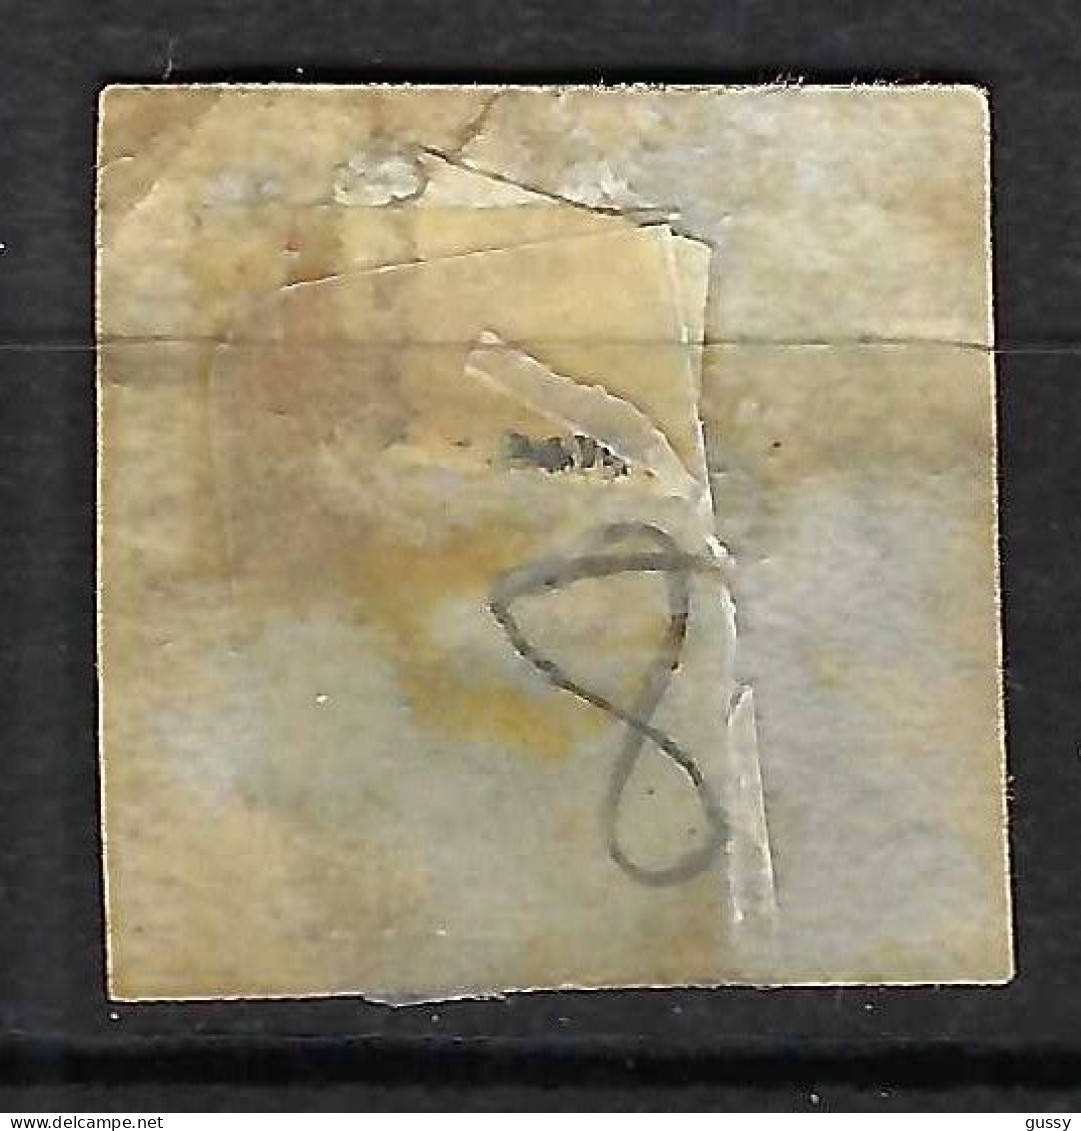 DANEMARK Ca.1885: Le Y&T 8, Fond Pointillé, Valeur En Ore - Used Stamps